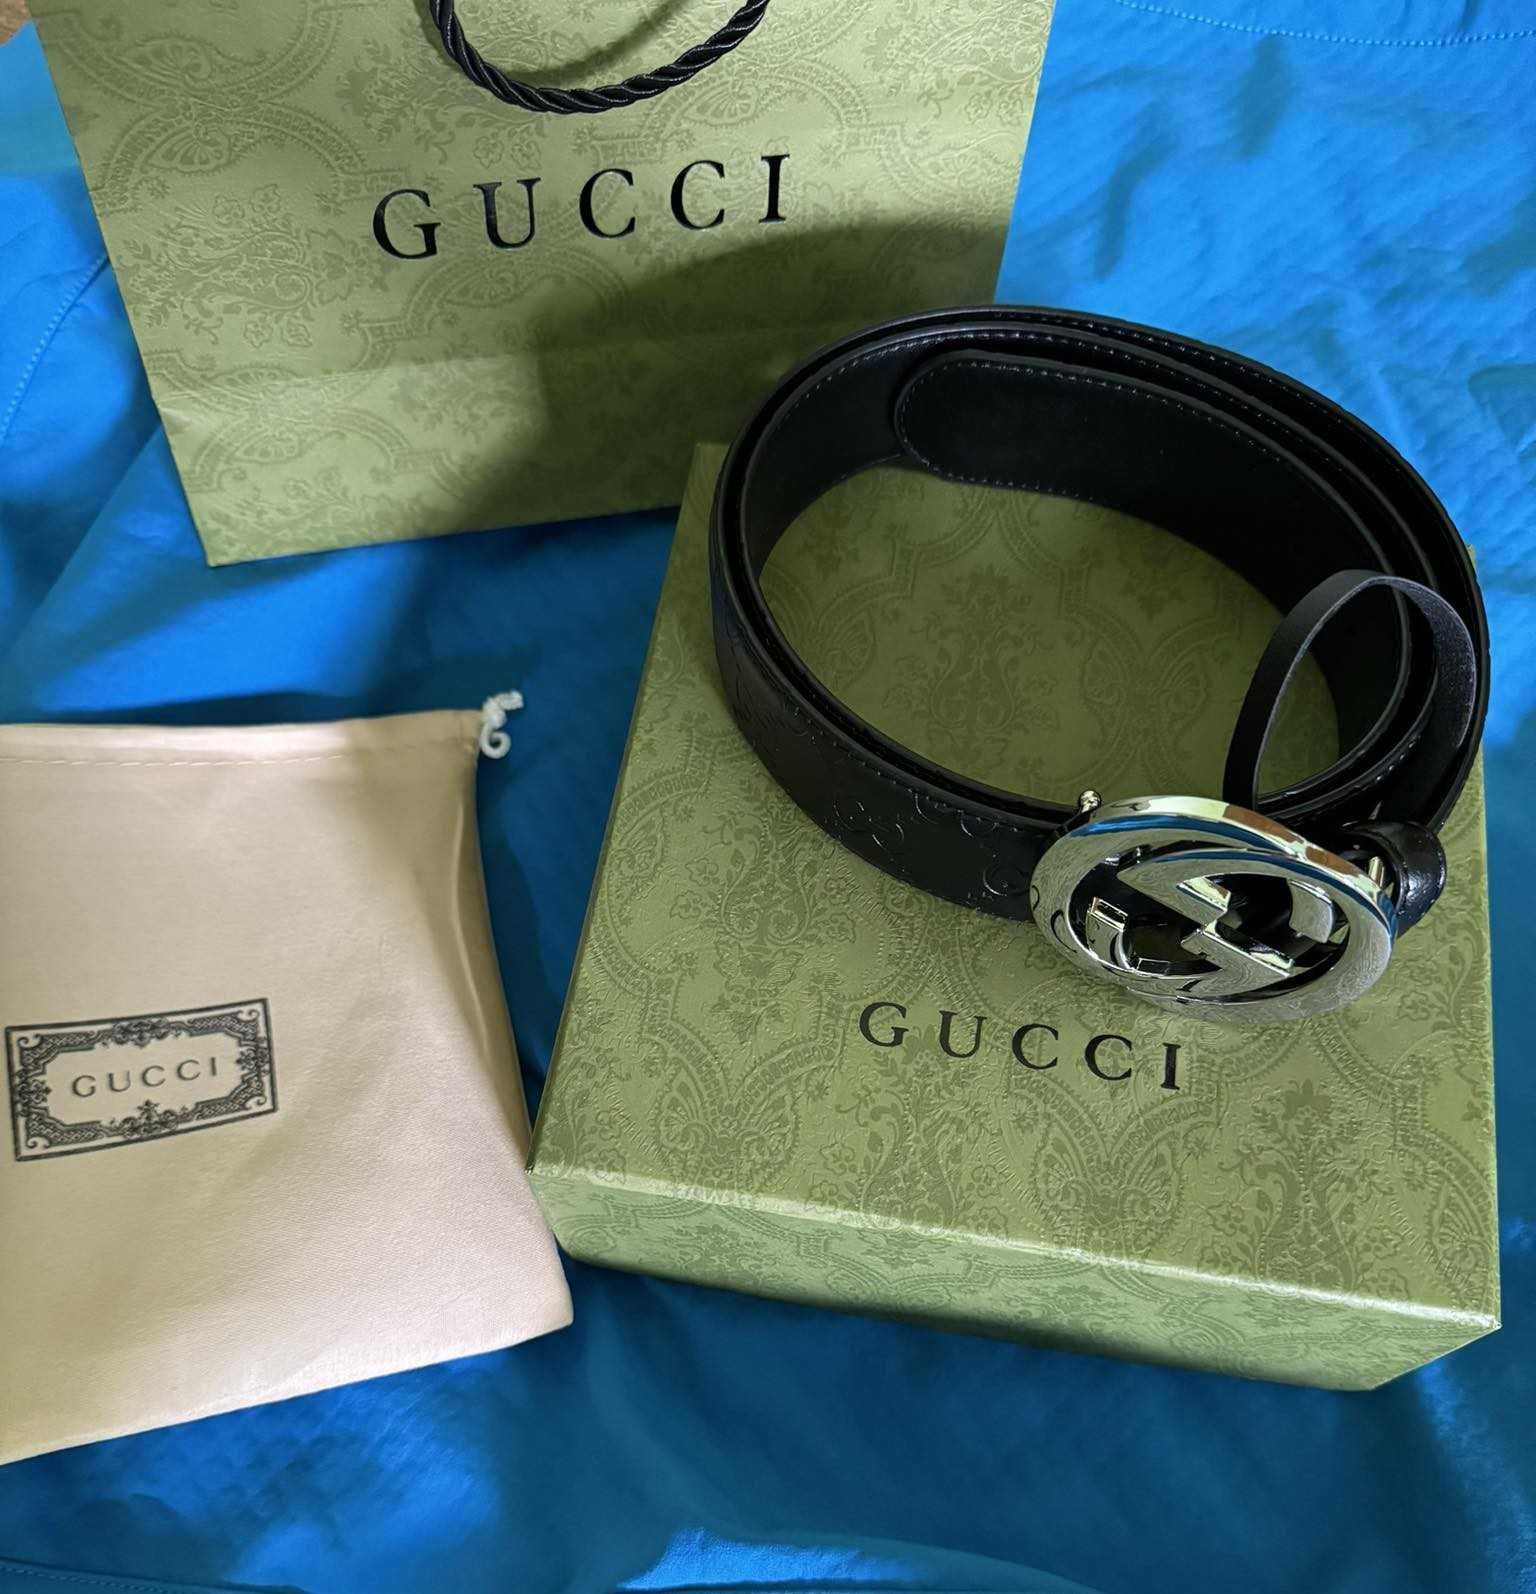 Unisex Pasek Gucci czarny z metalową klamrą